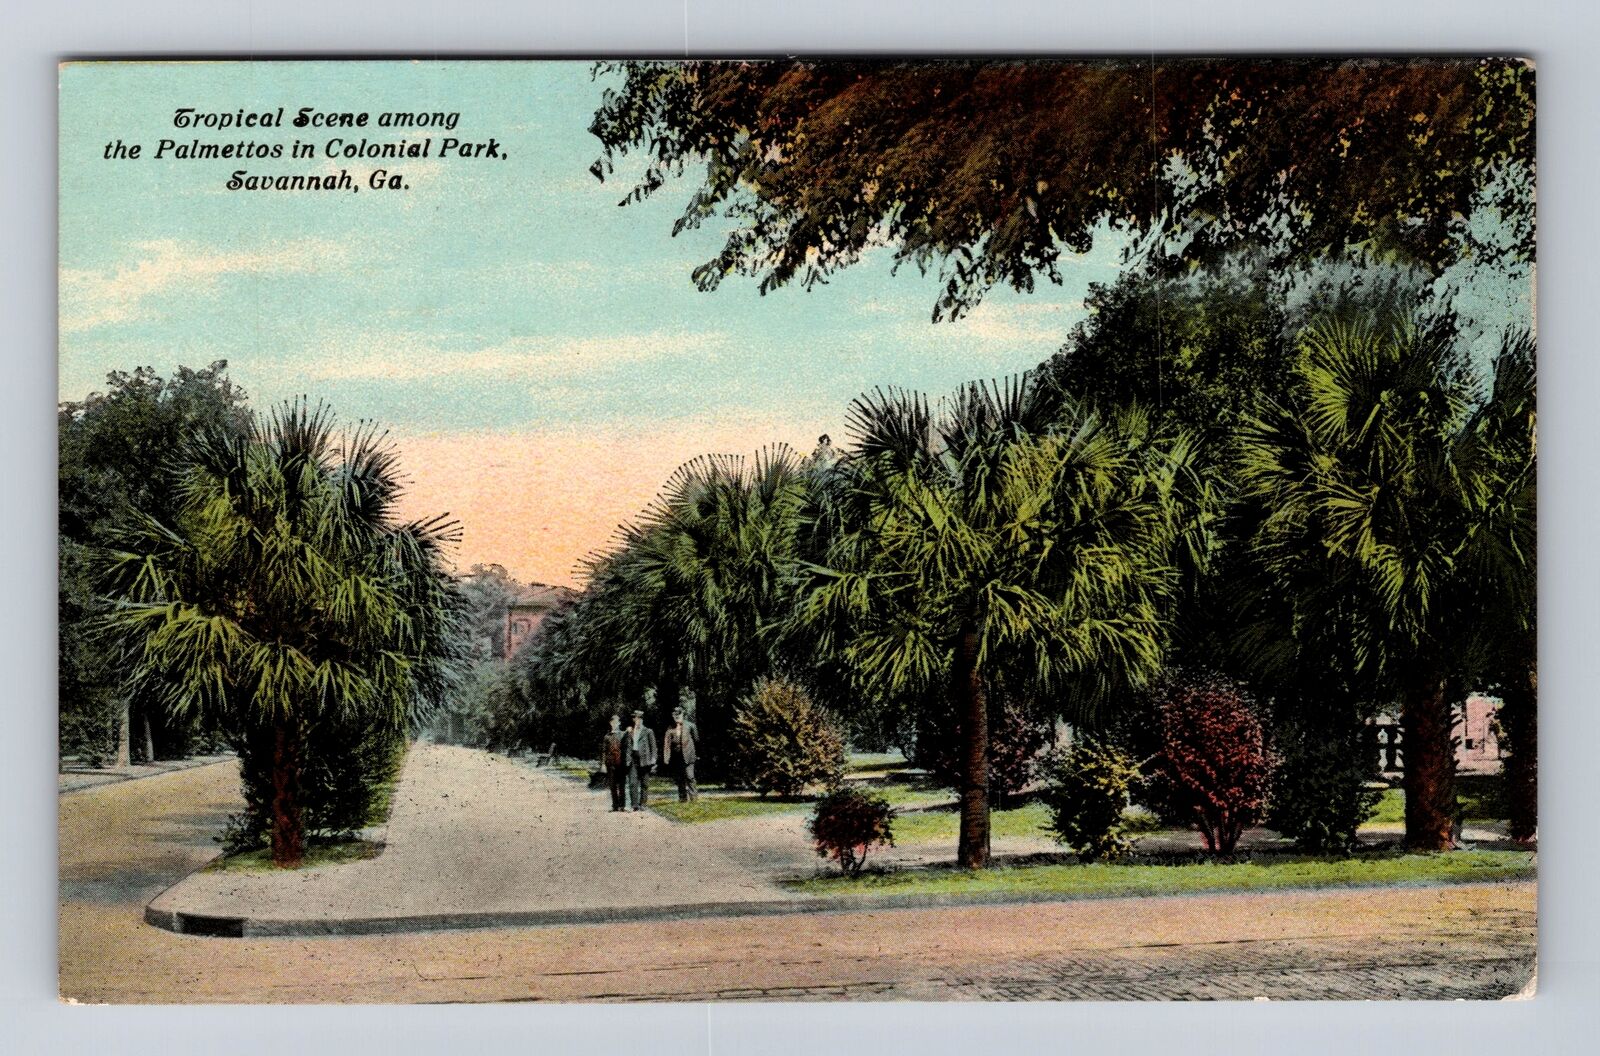 Savannah GA-Georgia, Tropical Scene In Colonial Park, Gents, Vintage Postcard